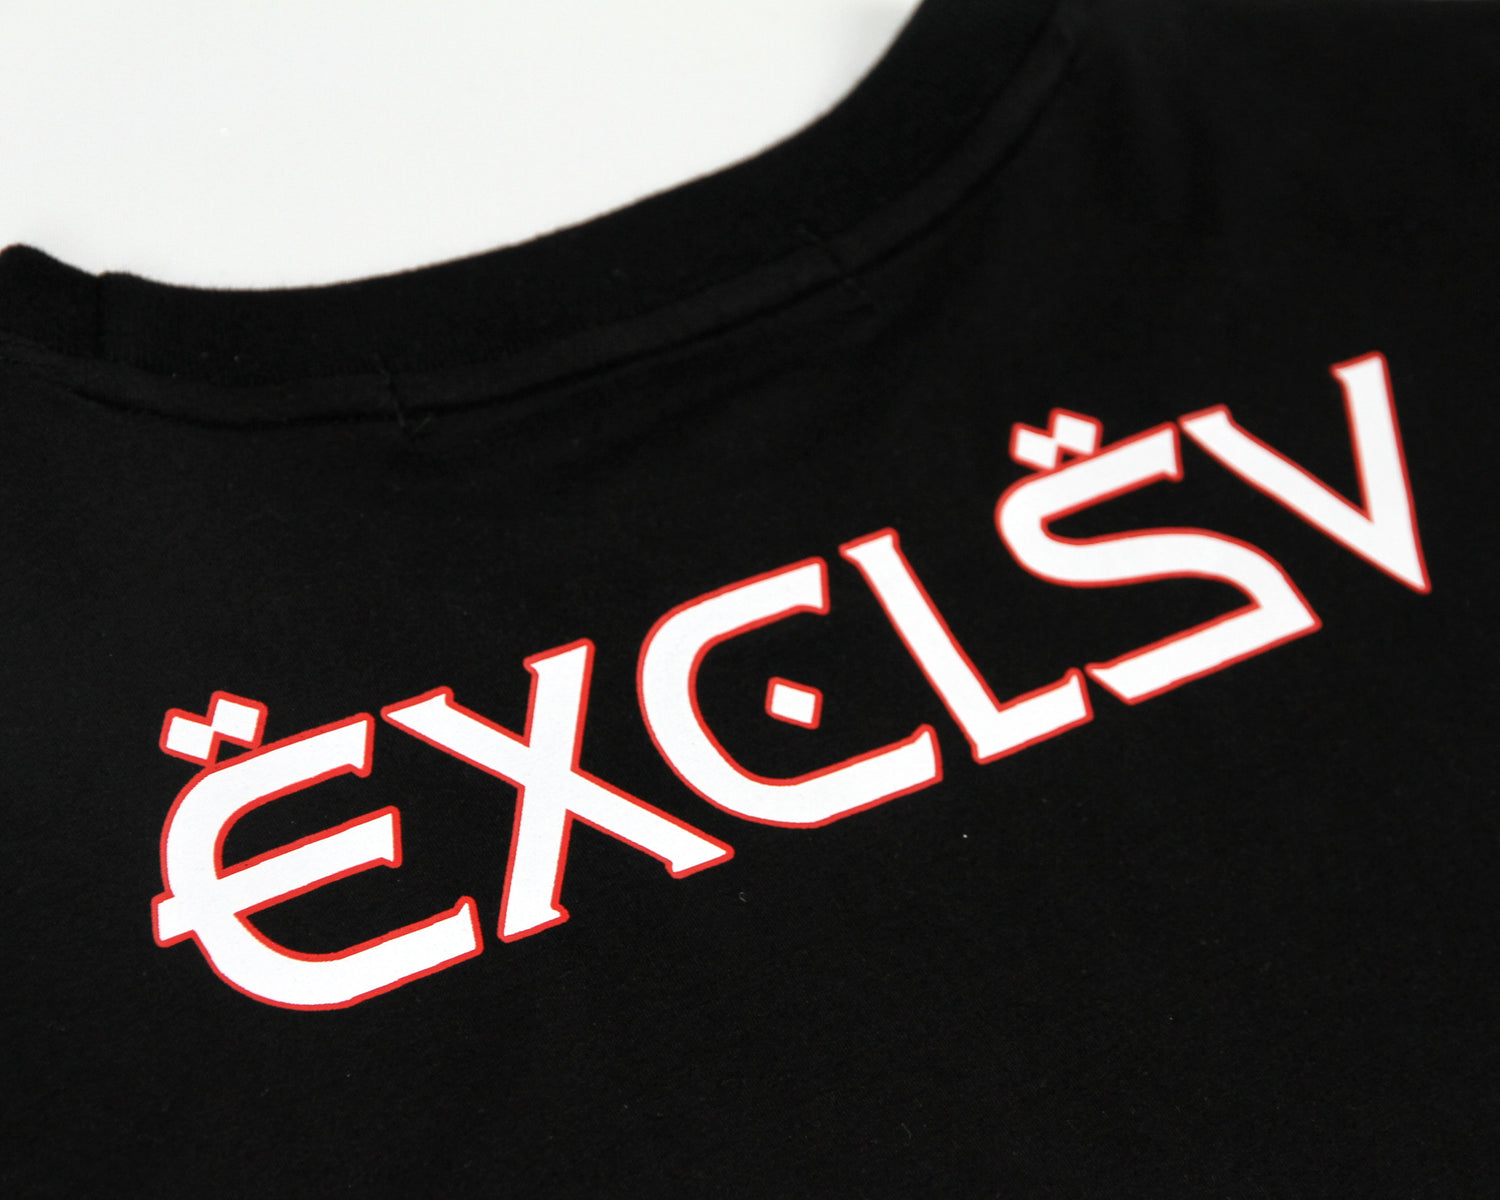 Black Oversized Logo T-Shirt - EXCLSV XXVI